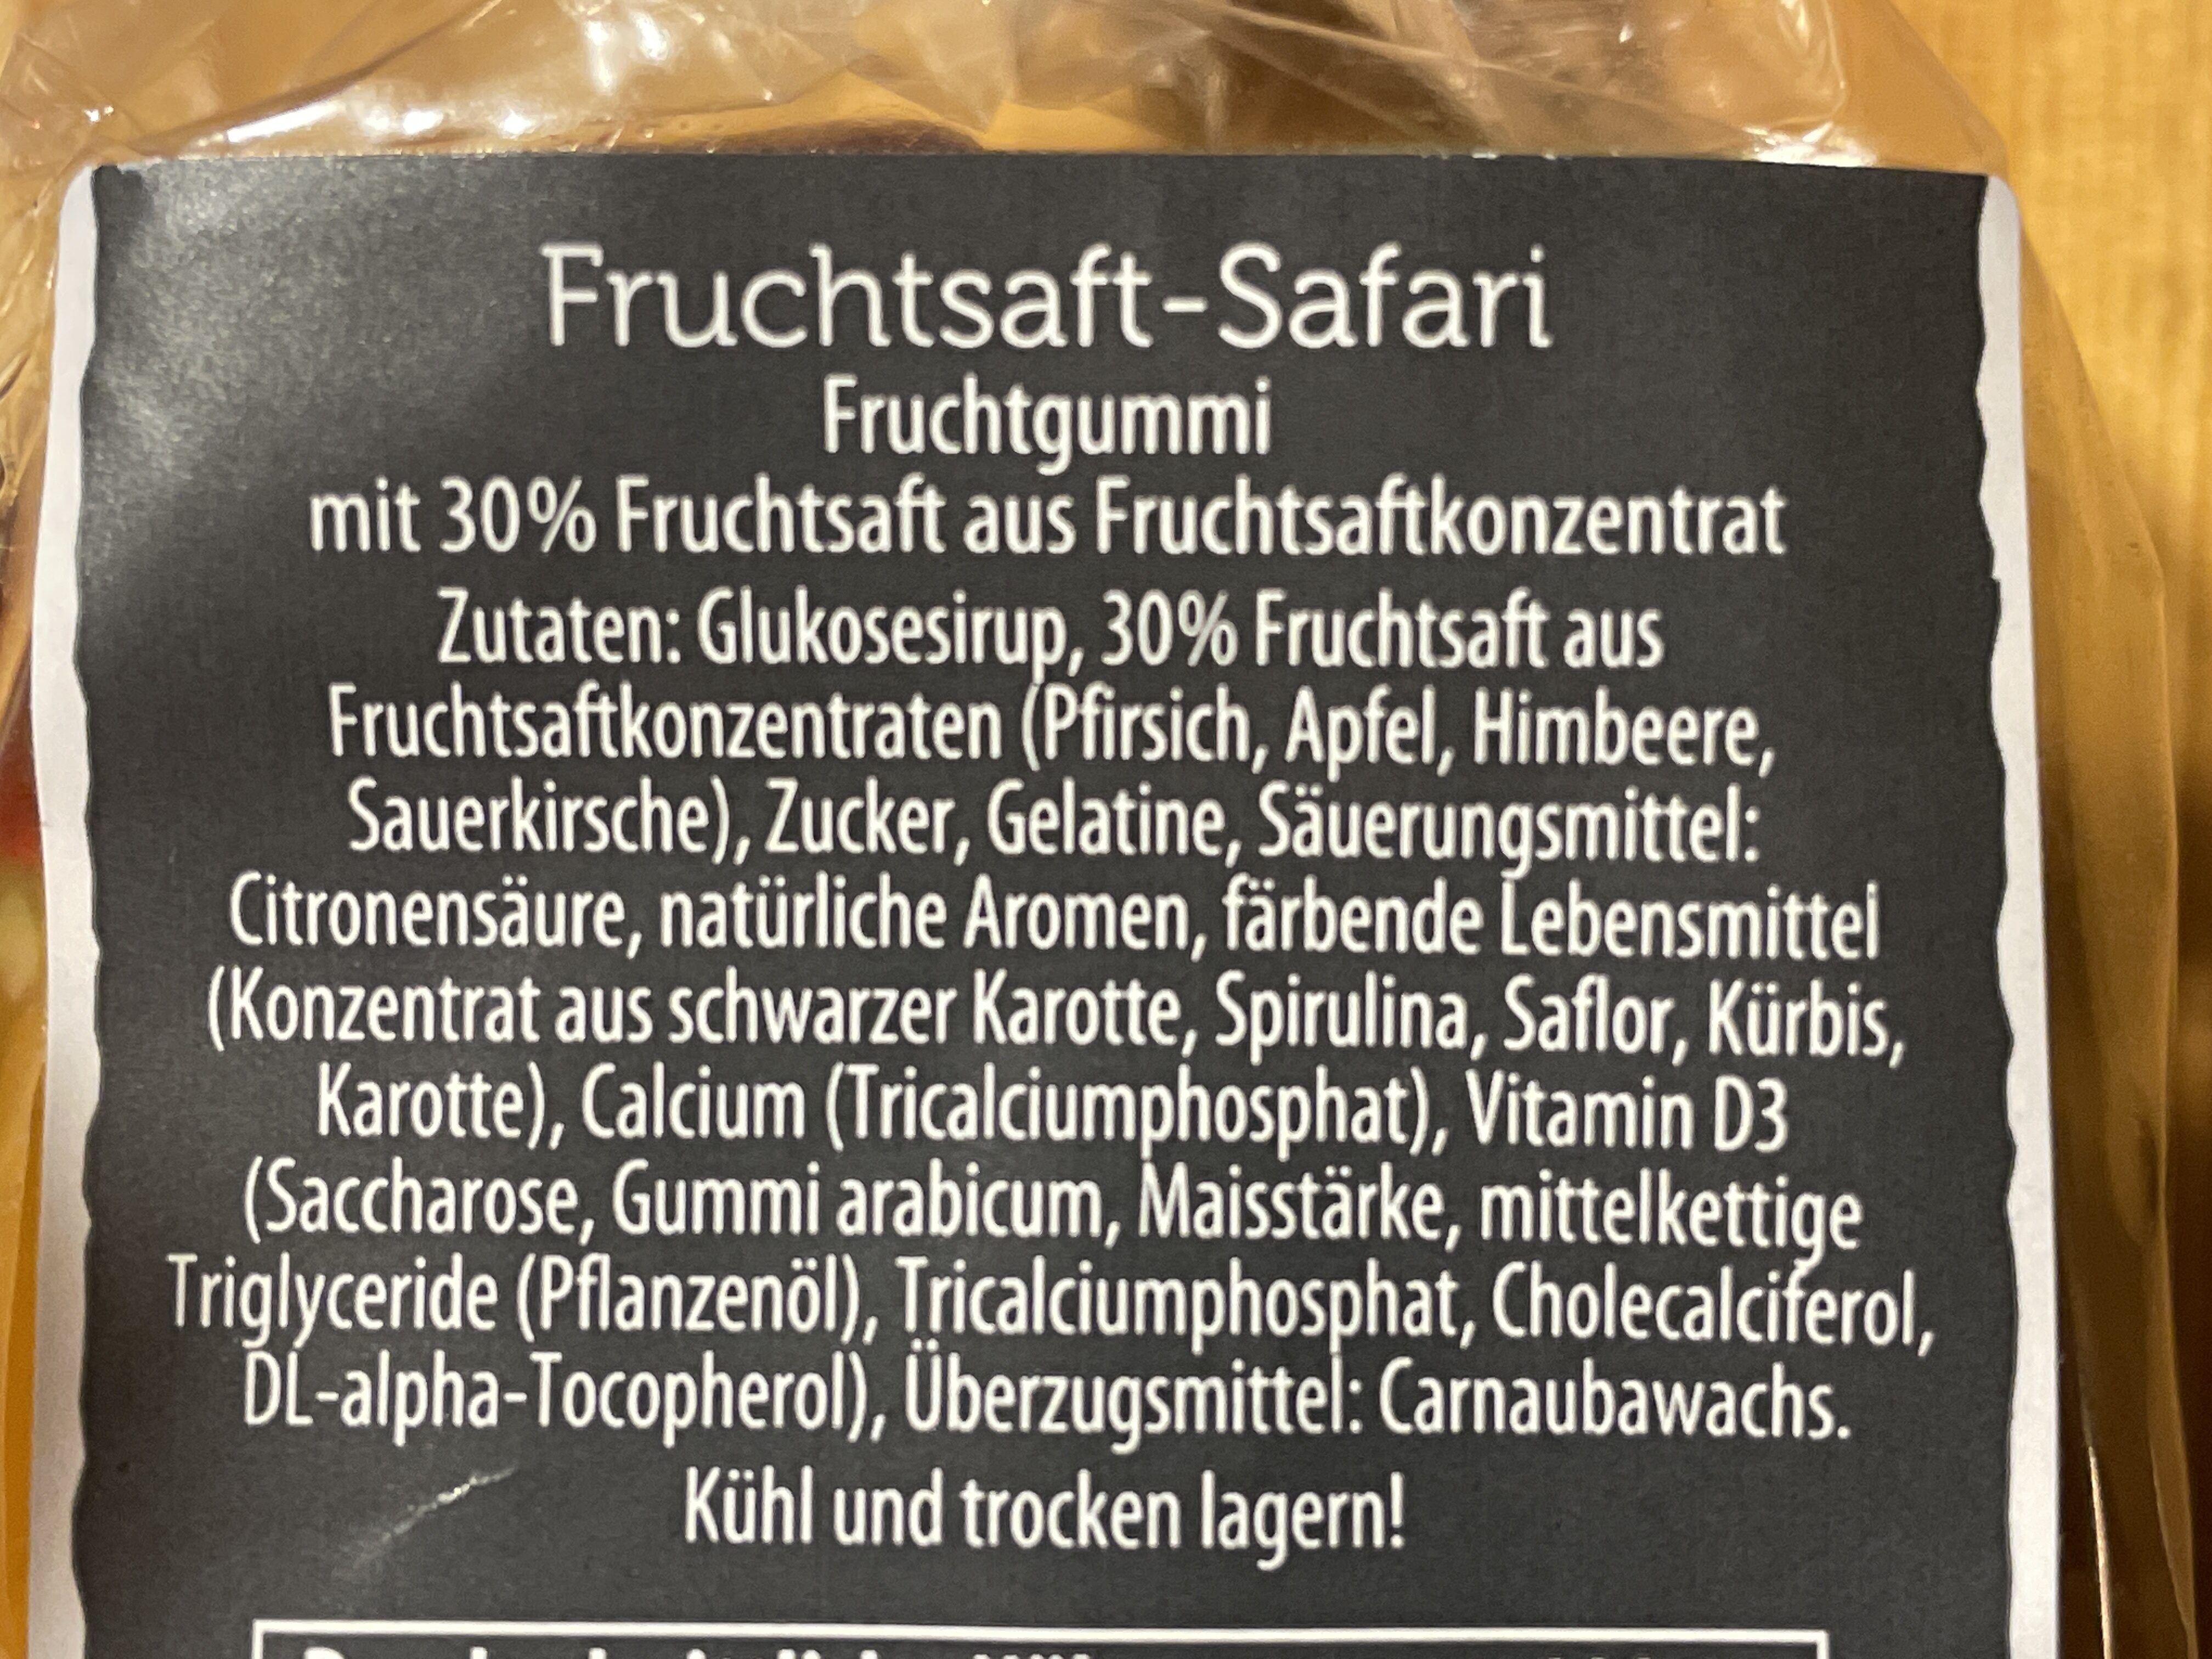 Fruchtsaft Safari Gummibärchen - Ingredients - de